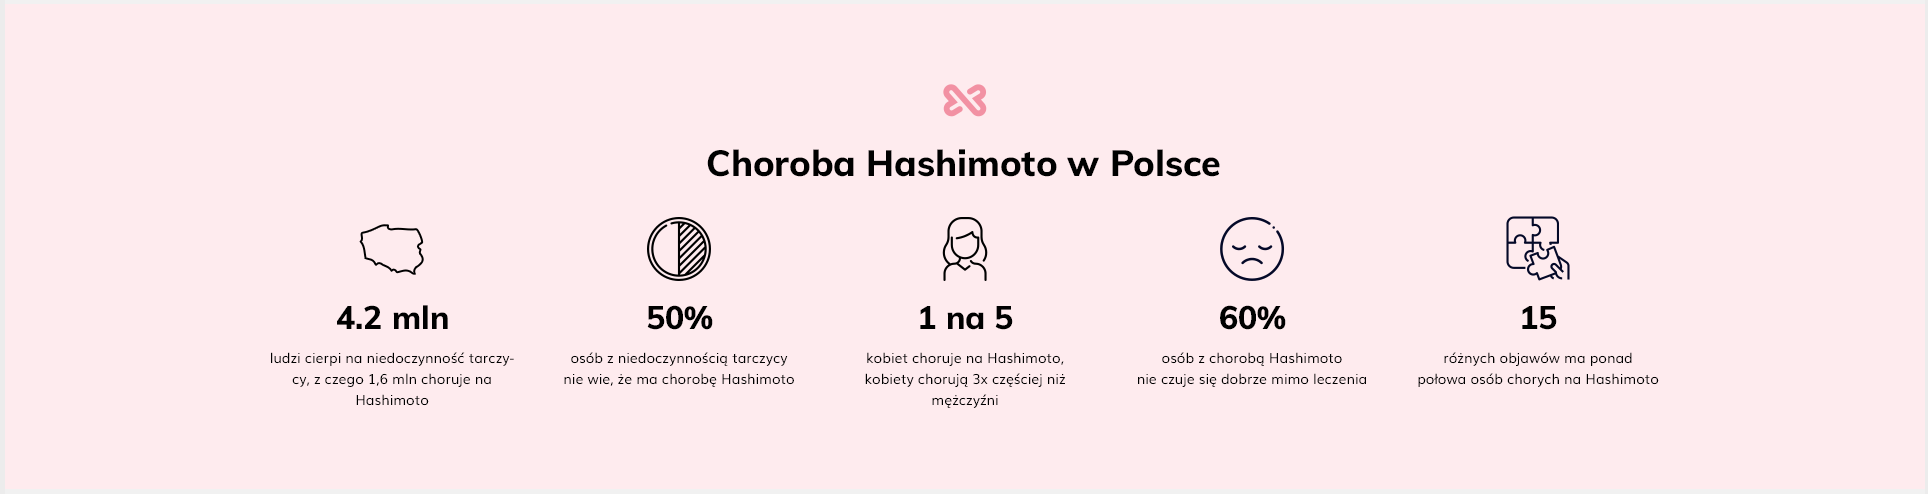 choroba hashimoto w Polsce